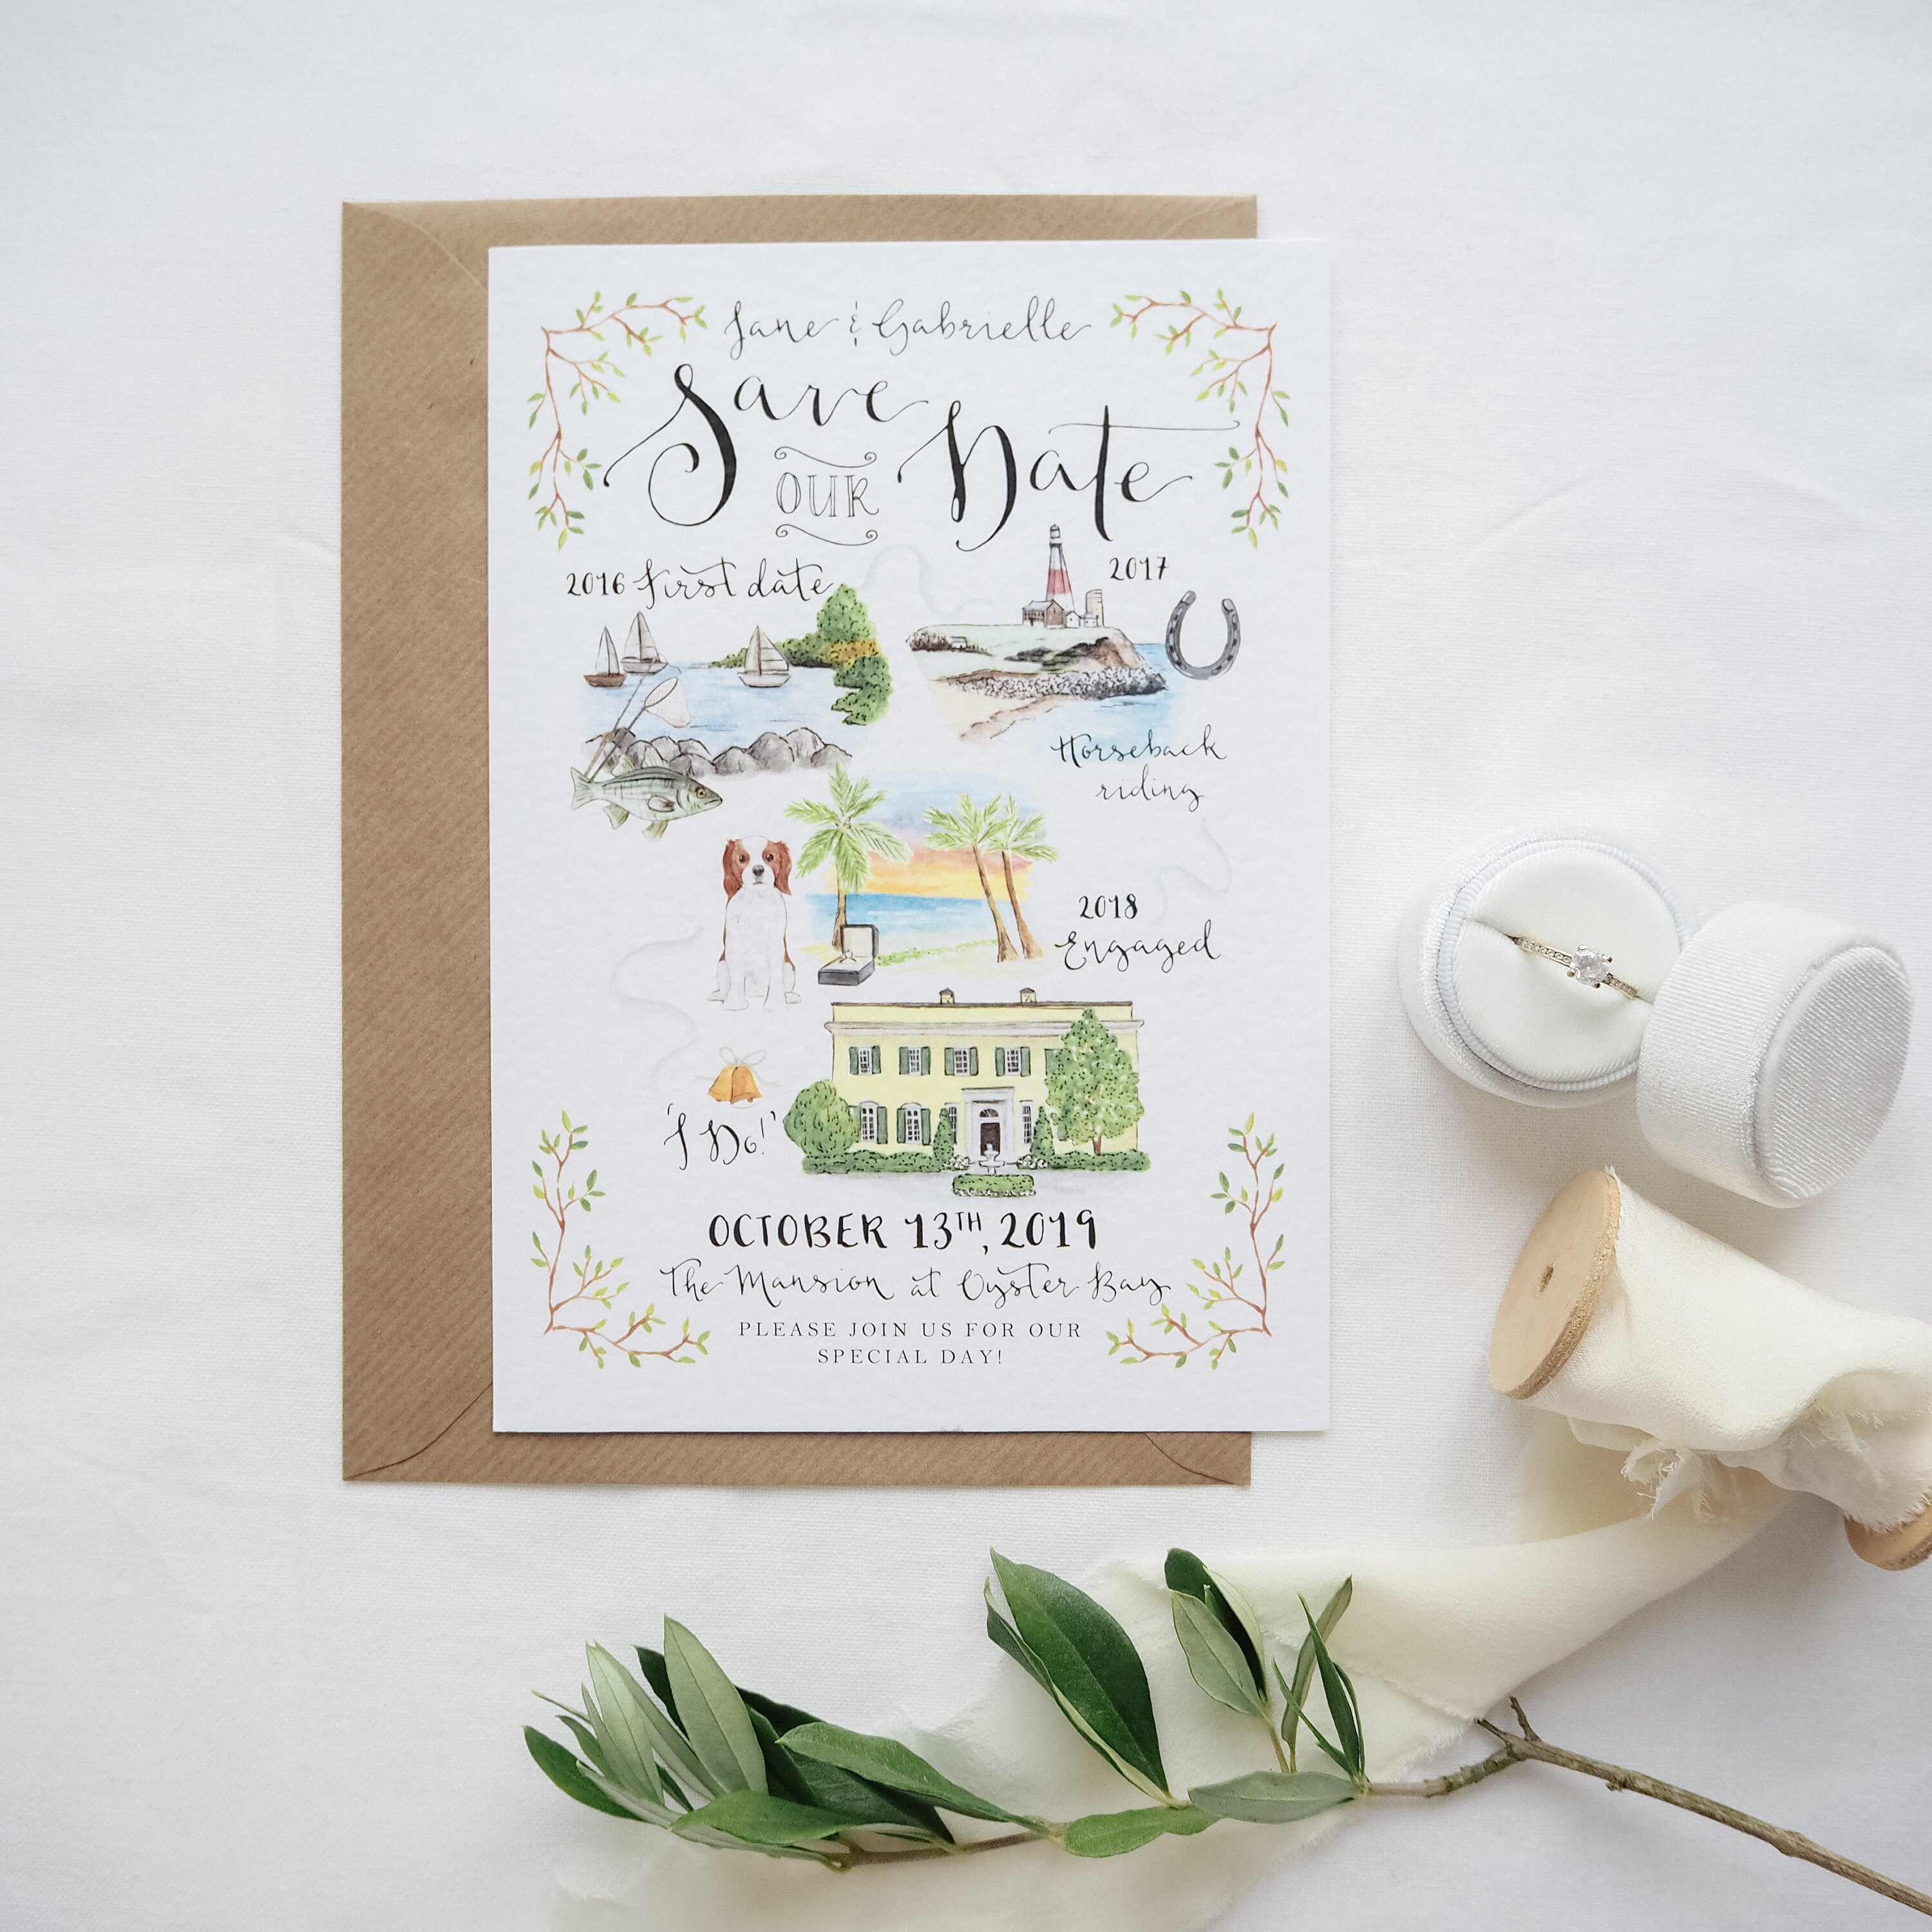 DIY Guest Book Templates - Zola Expert Wedding Advice